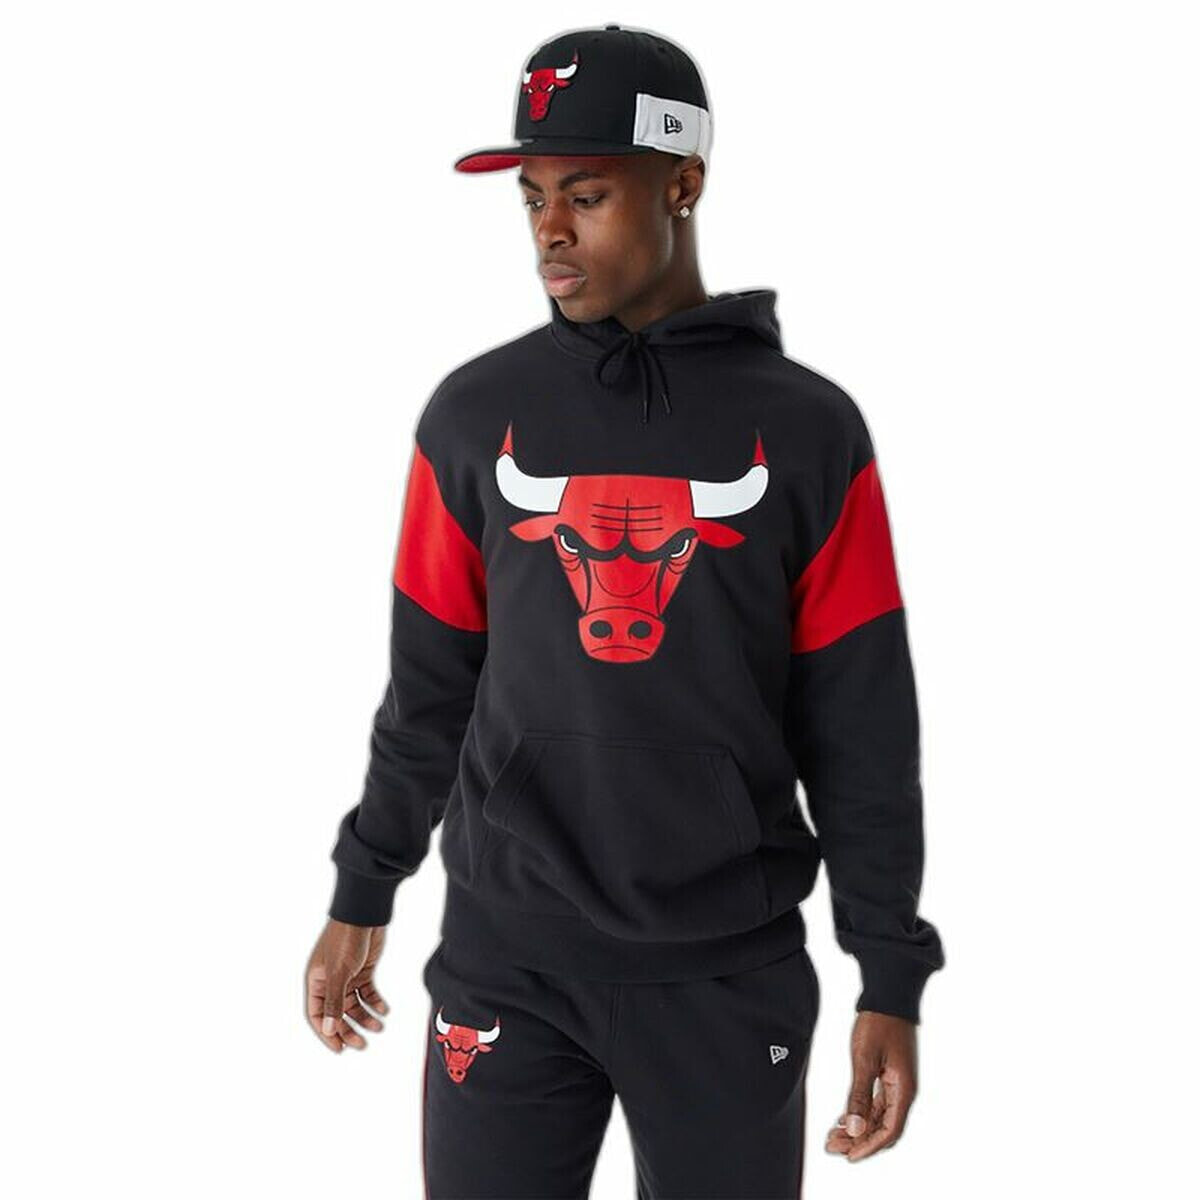 Unisex Hoodie New Era NBA Colour Insert Chicago Bulls Black